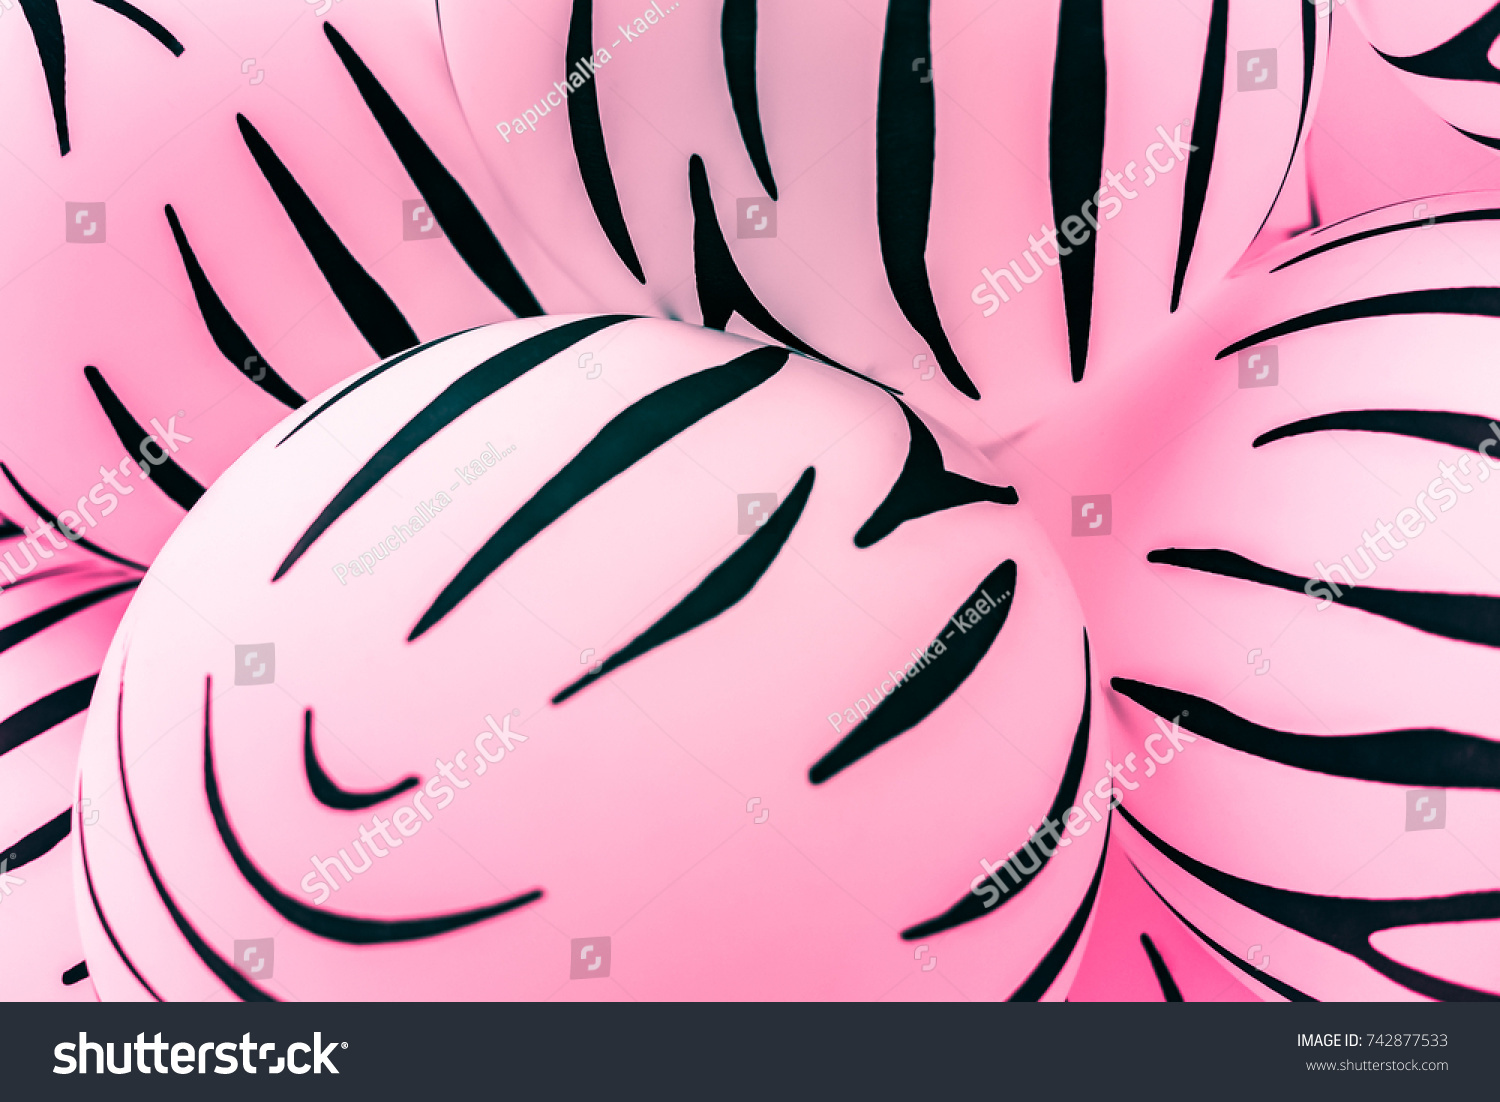 Pastel Bubblegum Pink Wallpaper